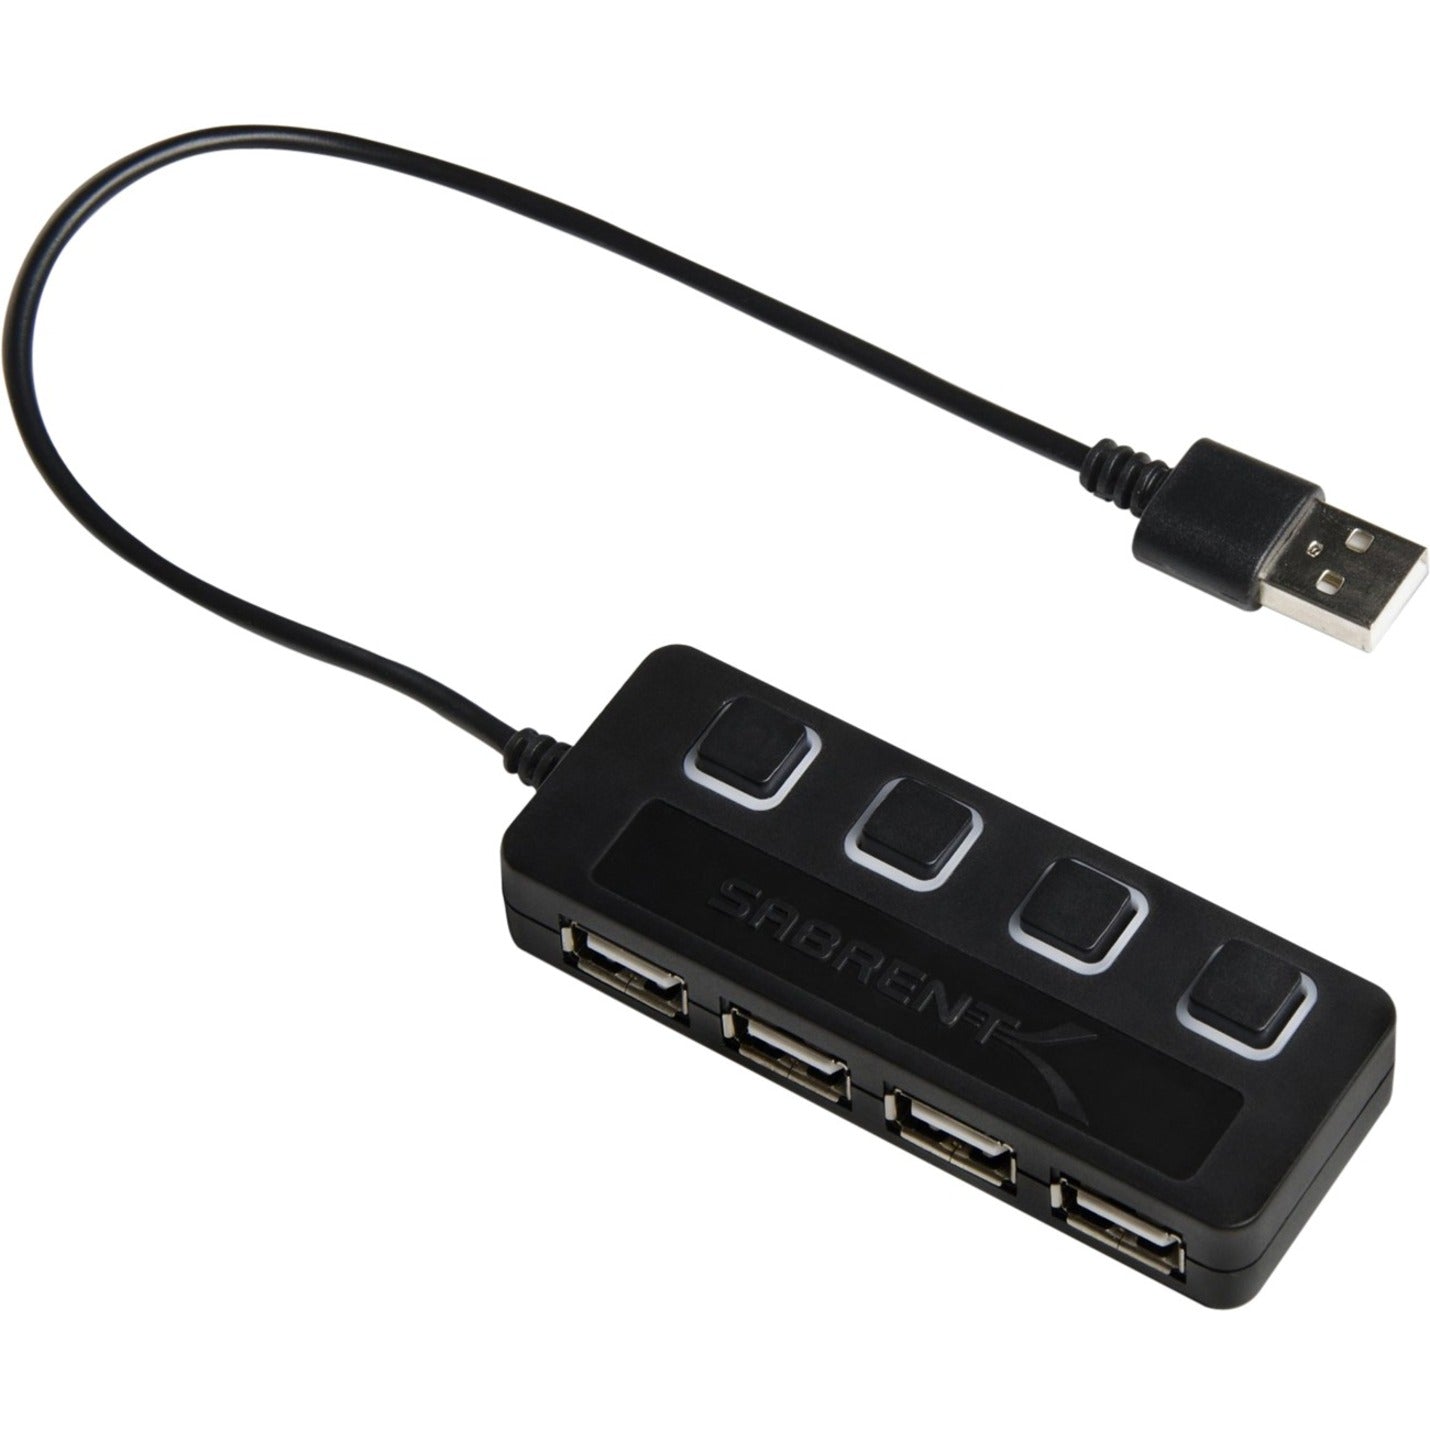 Sabrent HB-UMLS 4-PORT USB 2.0 HUB with Power Switches, External USB Hub